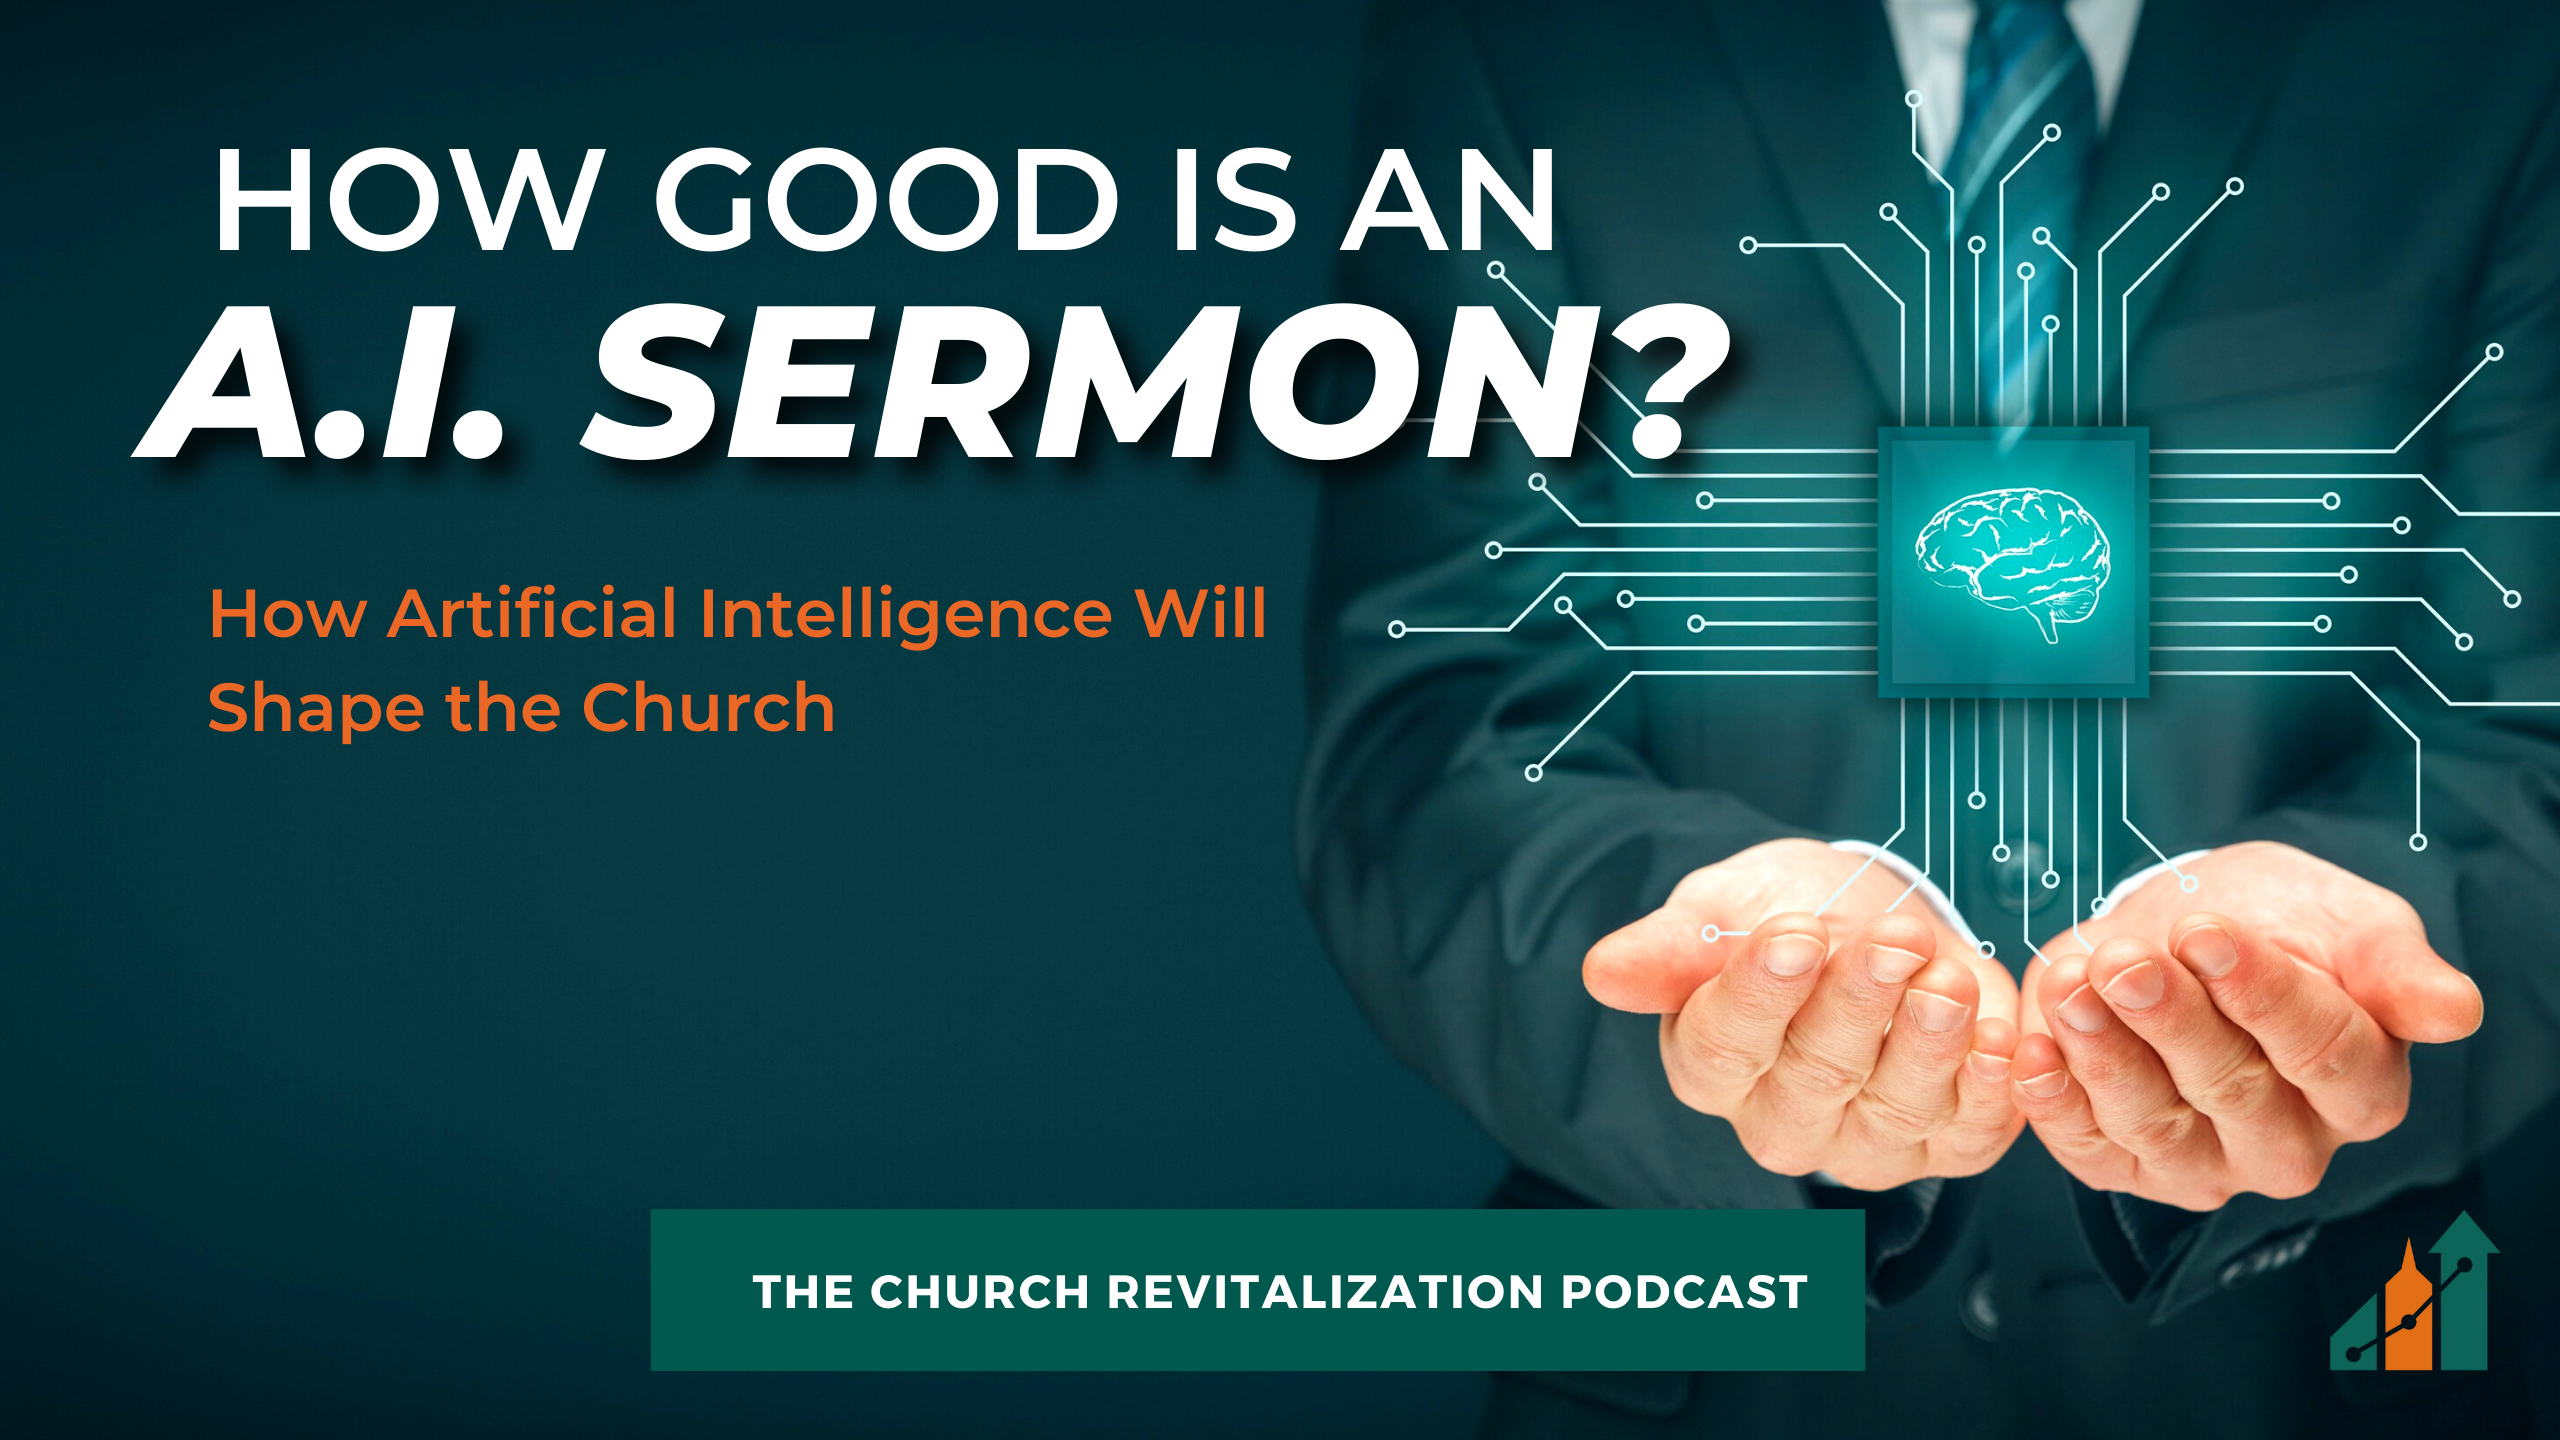 How Good Is an Artificial Intelligence Sermon?